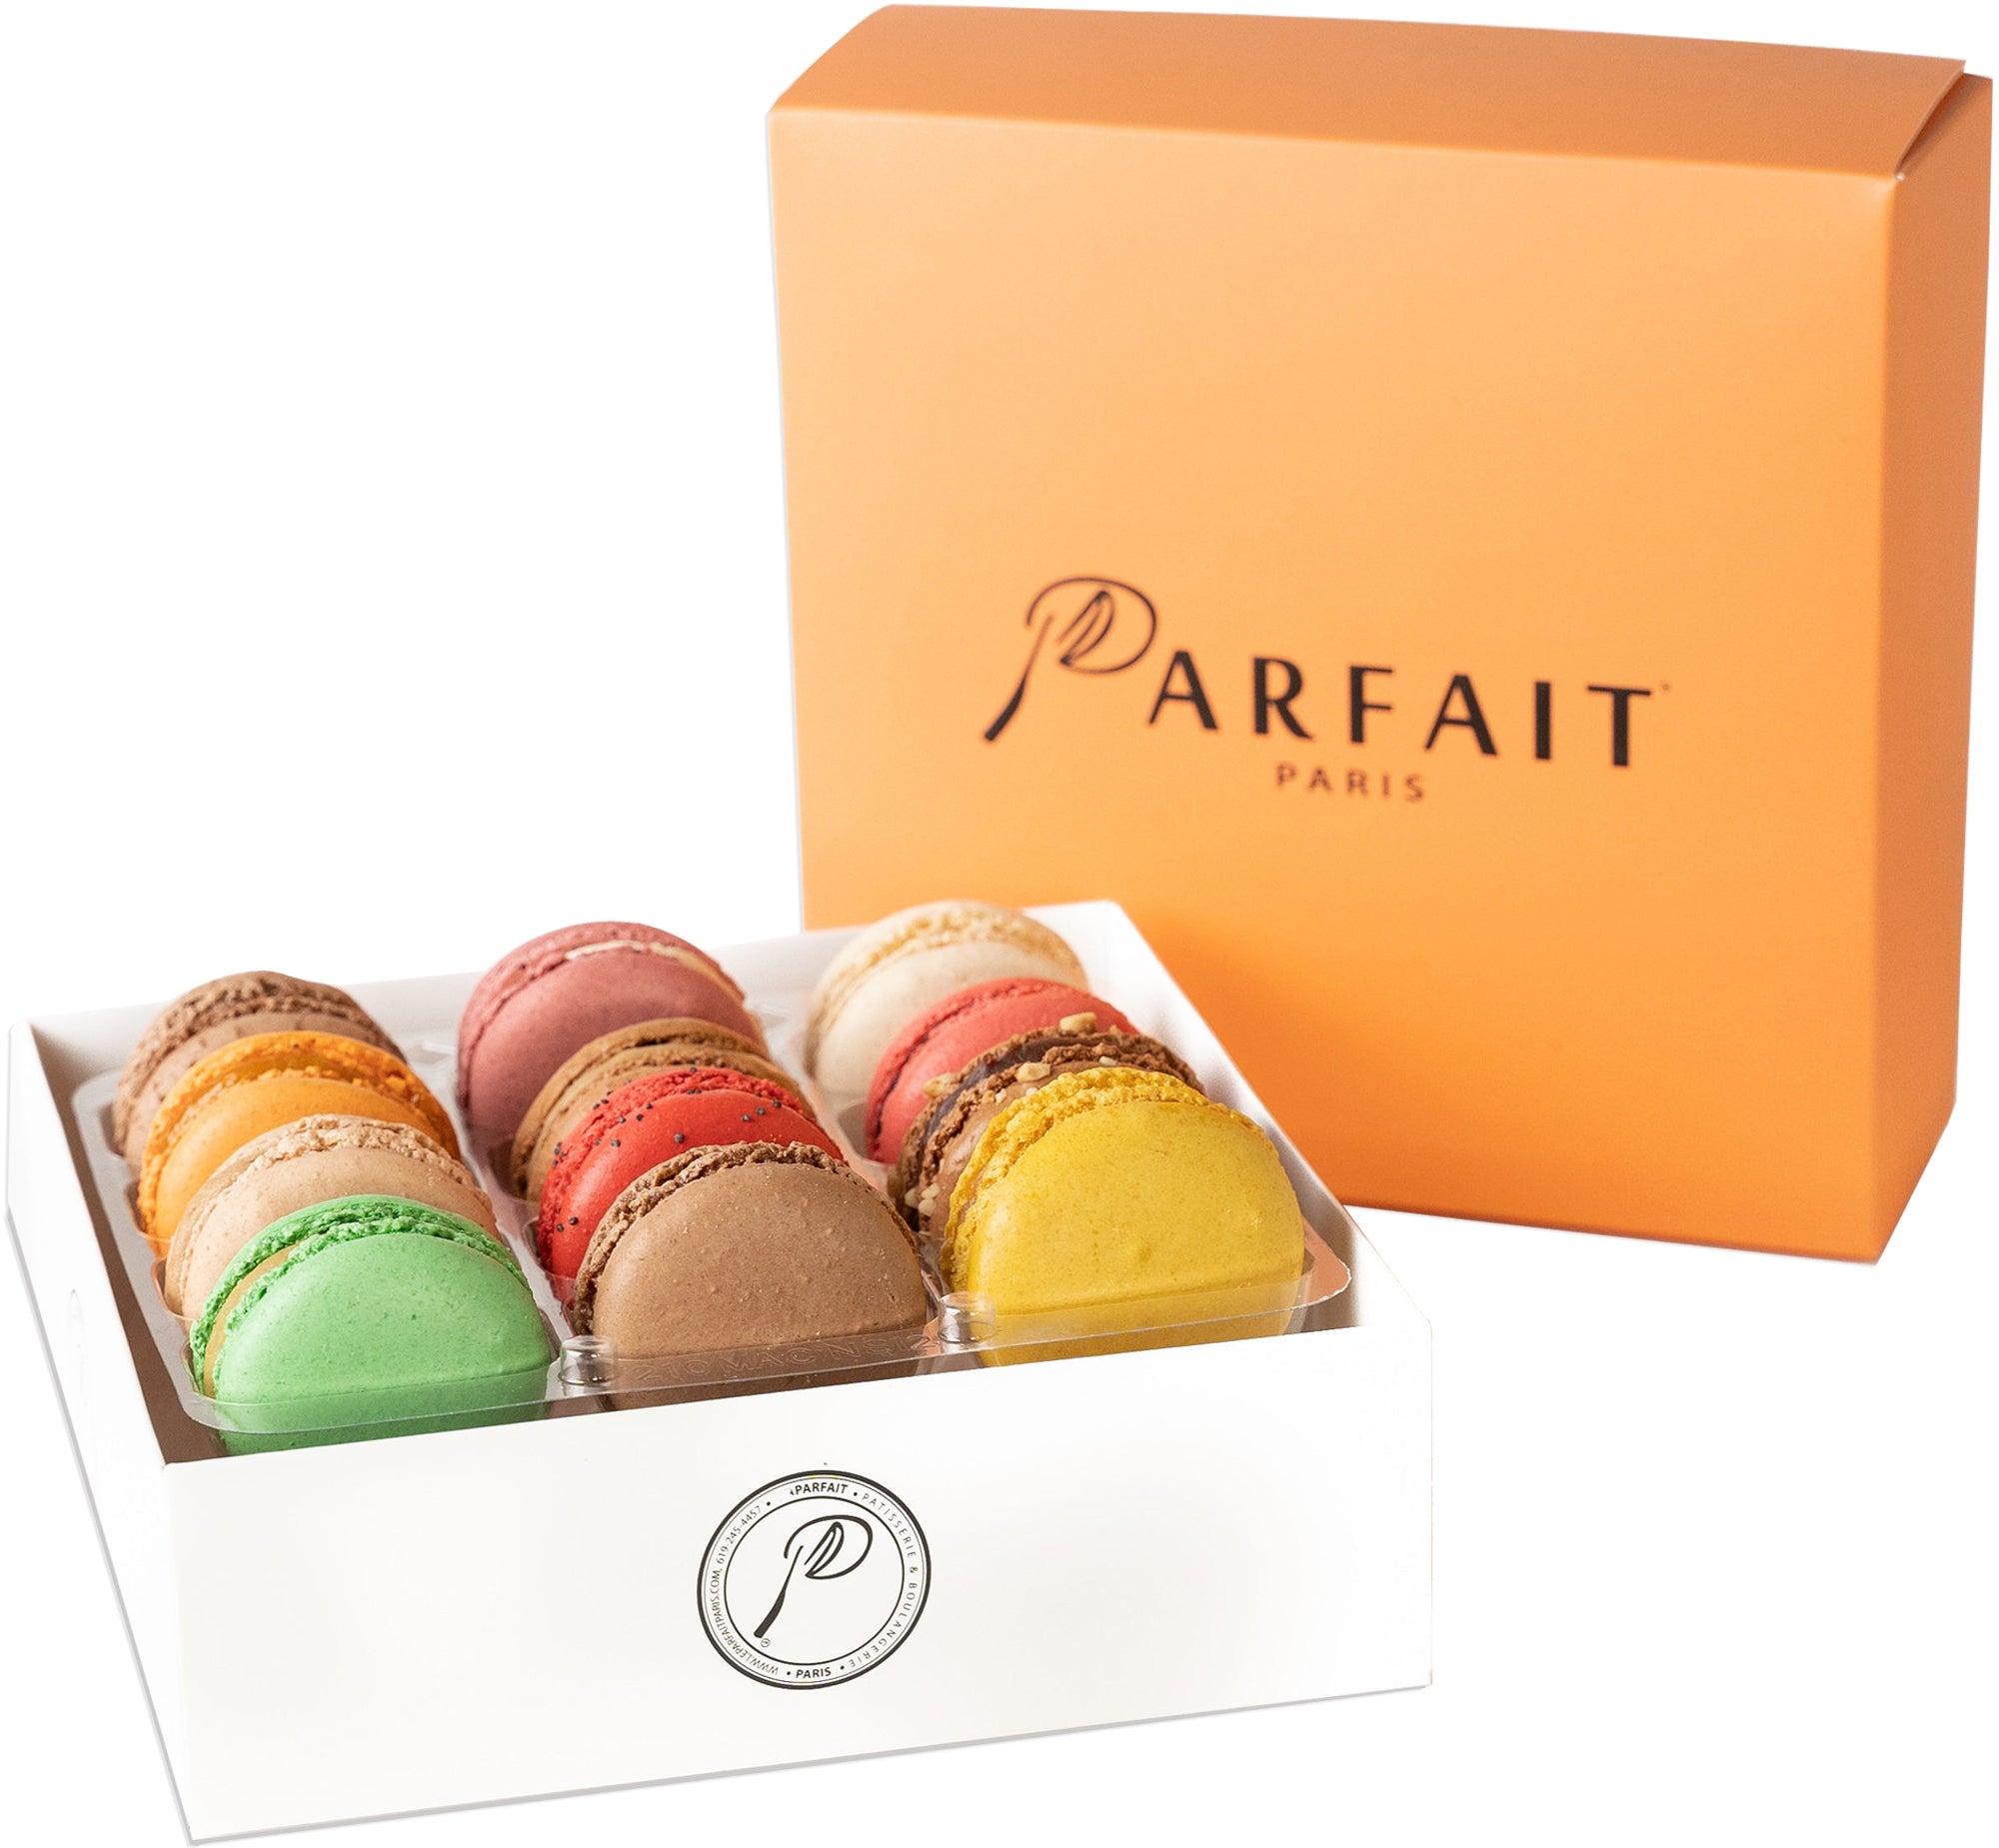 Parfait Paris Macaron Variety Pack